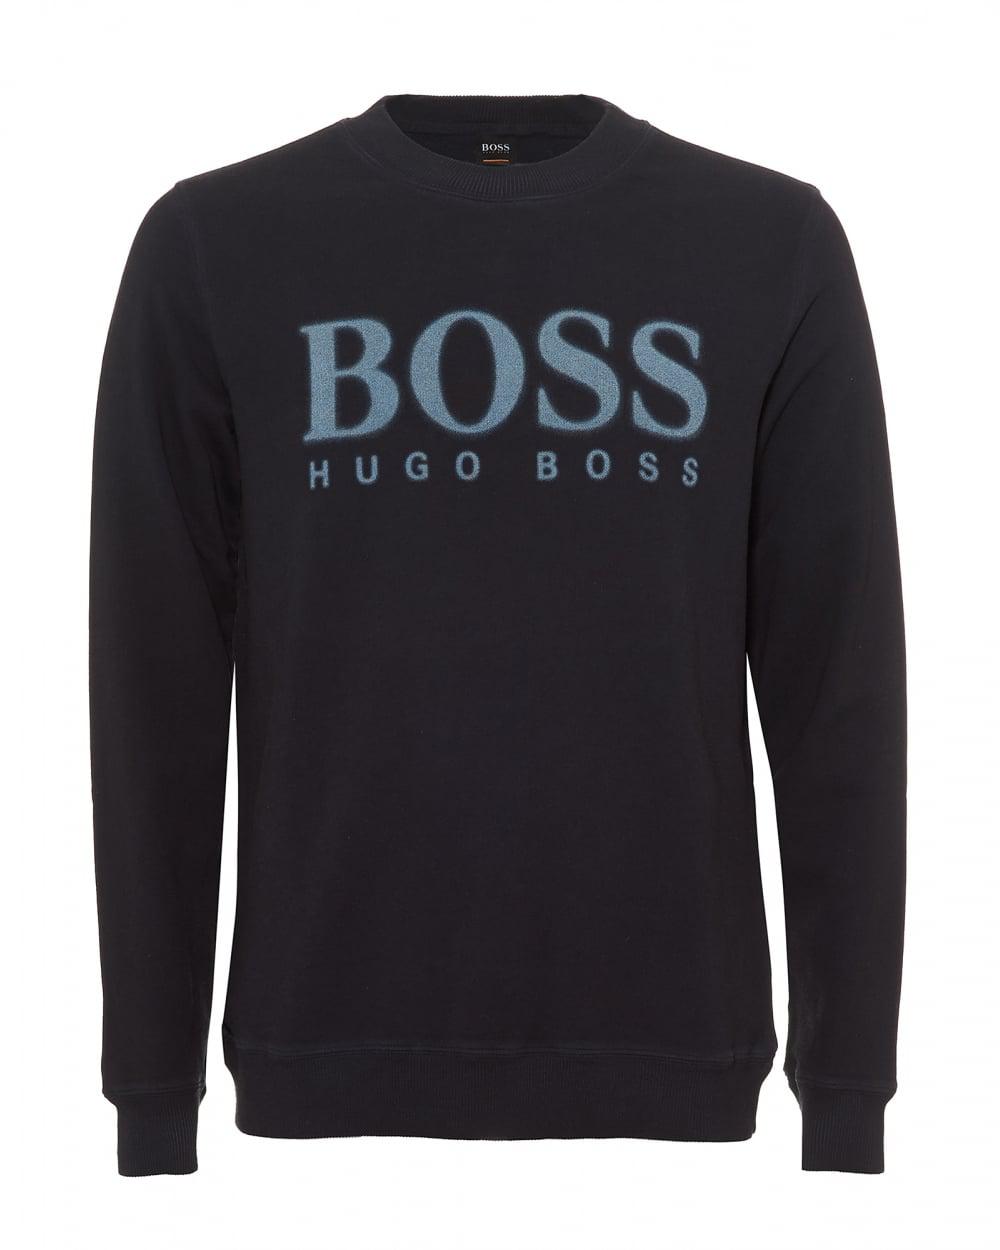 hugo boss walker sweatshirt OFF 54% - Online Shopping Site for Fashion &  Lifestyle.